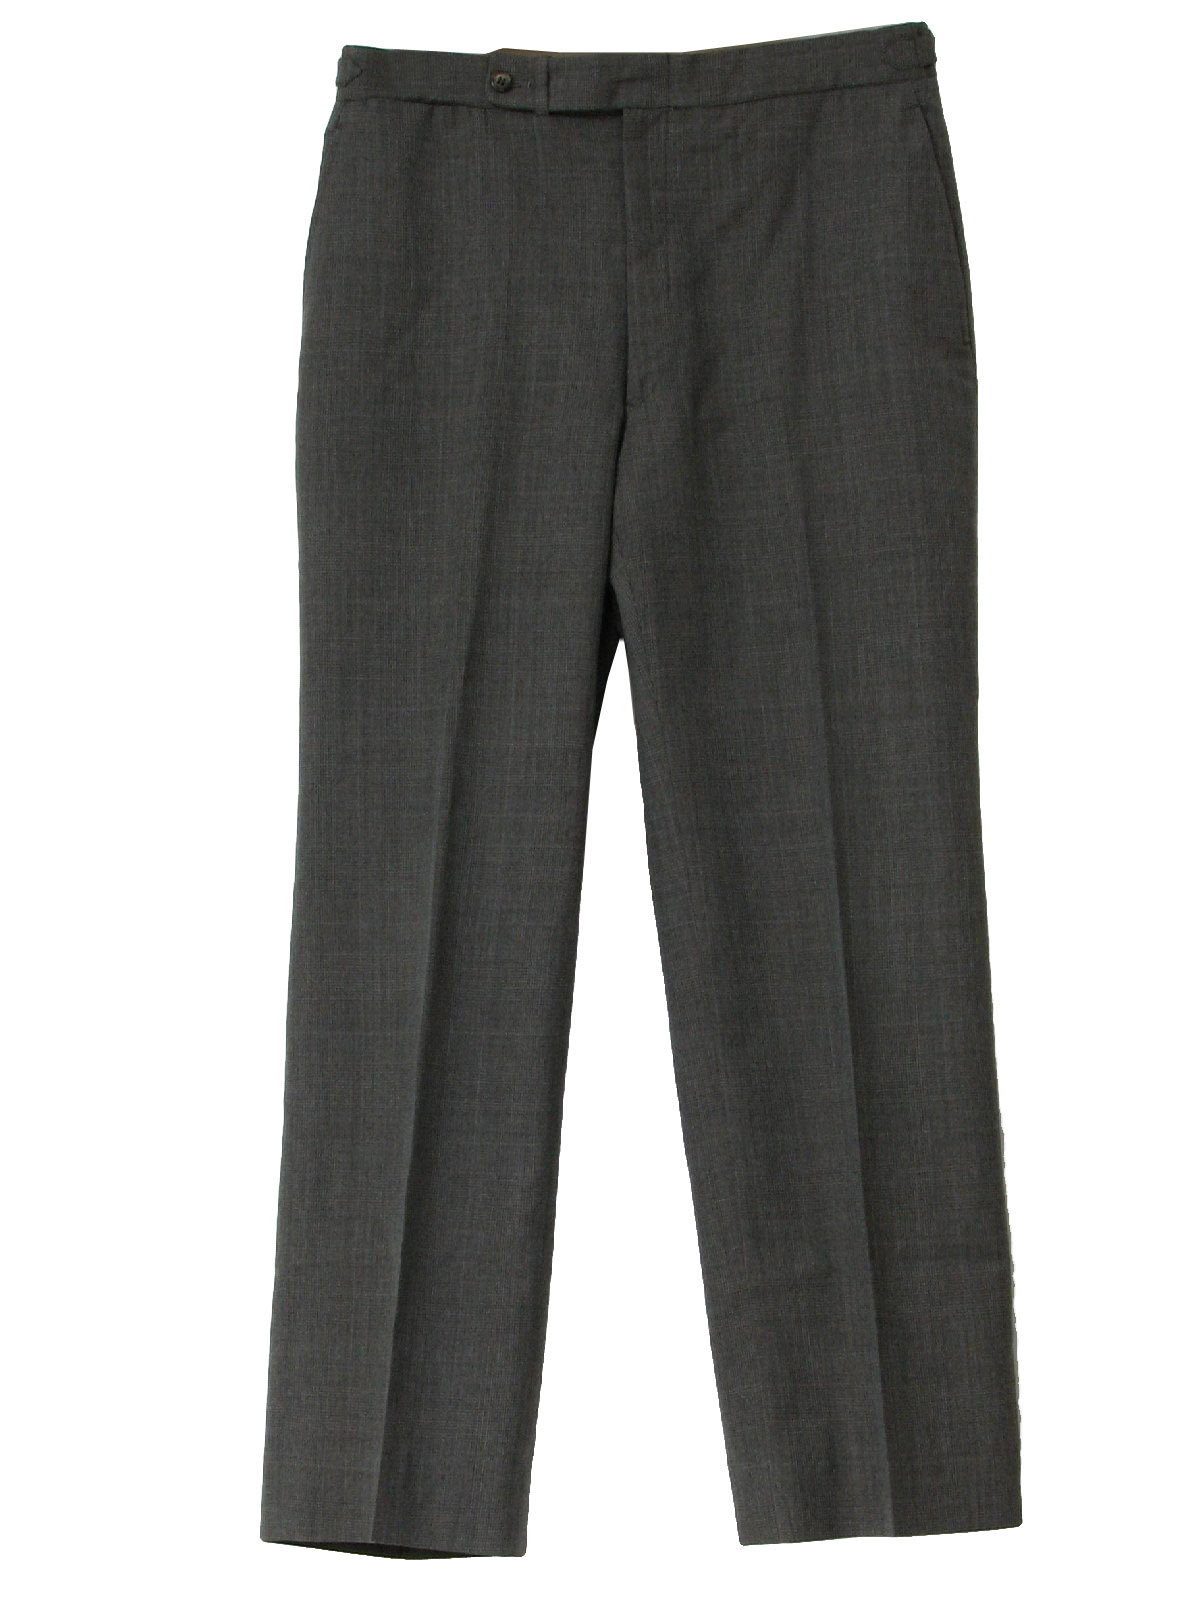 1980's Pants: 80s -No Label- Mens gray heather glen plaid wool